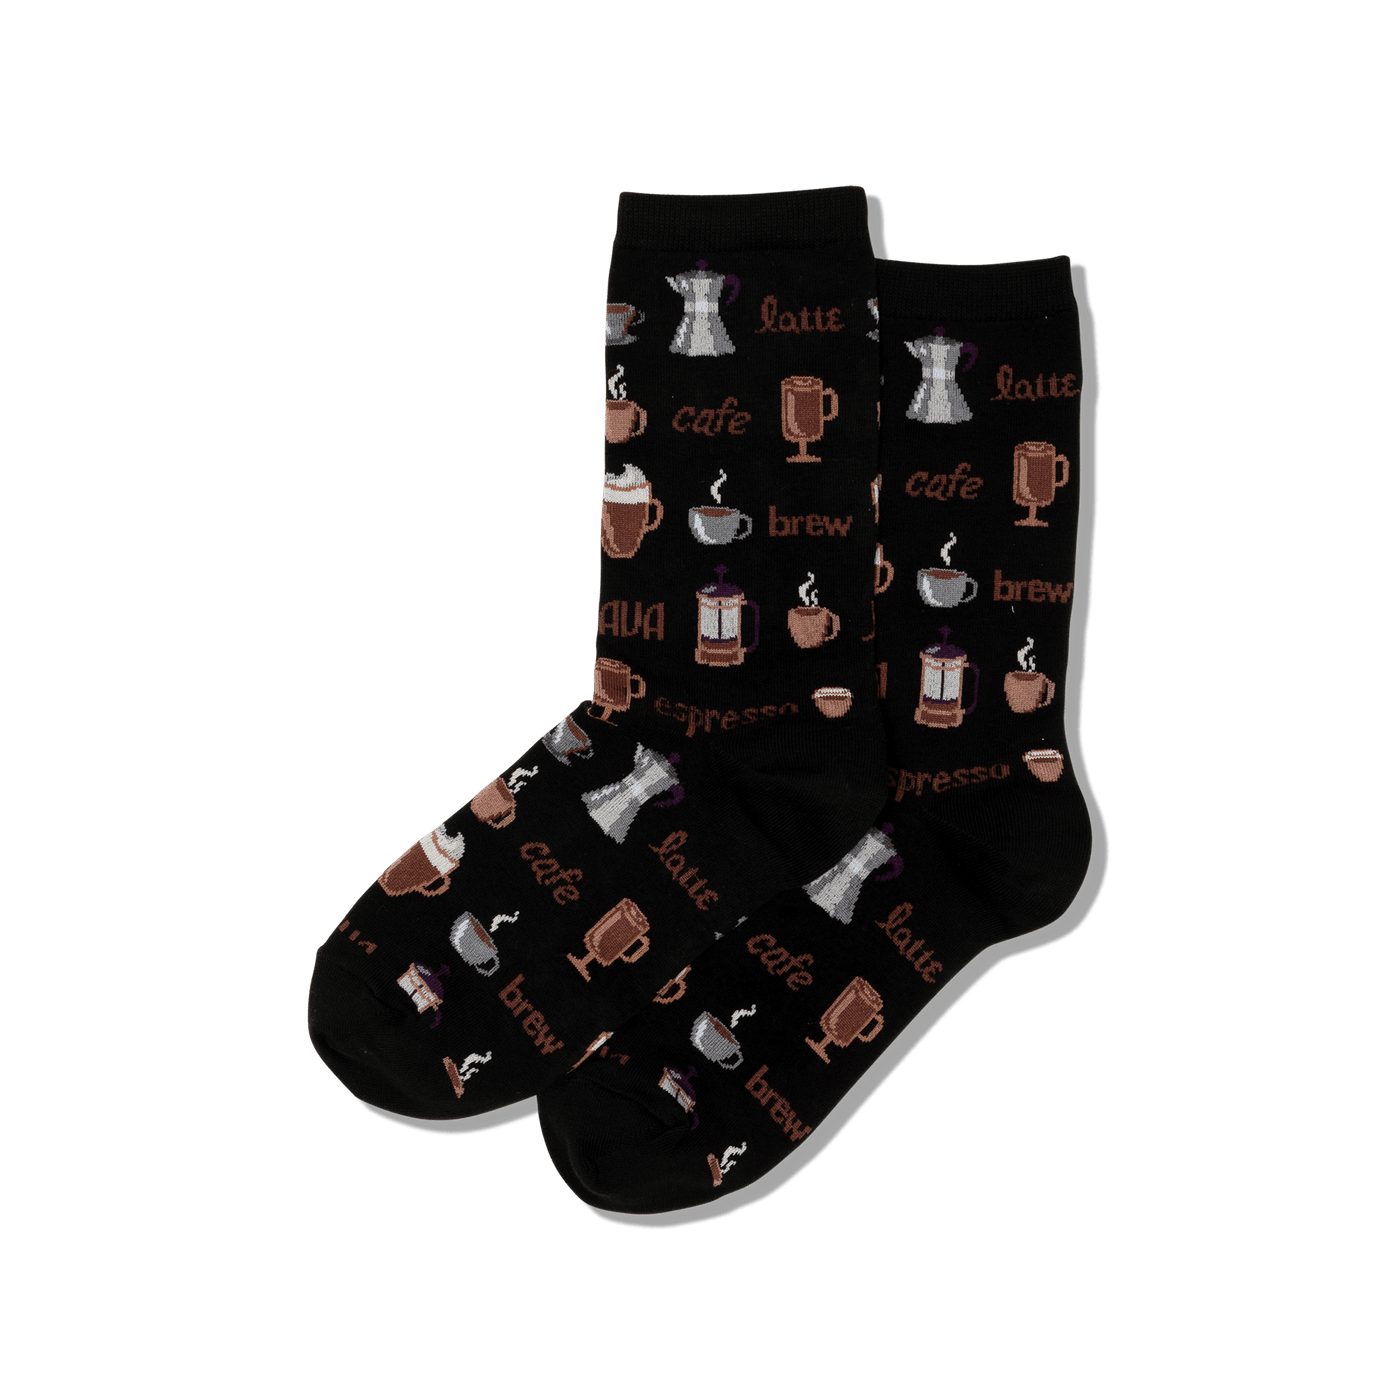 "Coffee" Cotton Dress Crew Socks by Hot Sox - Medium